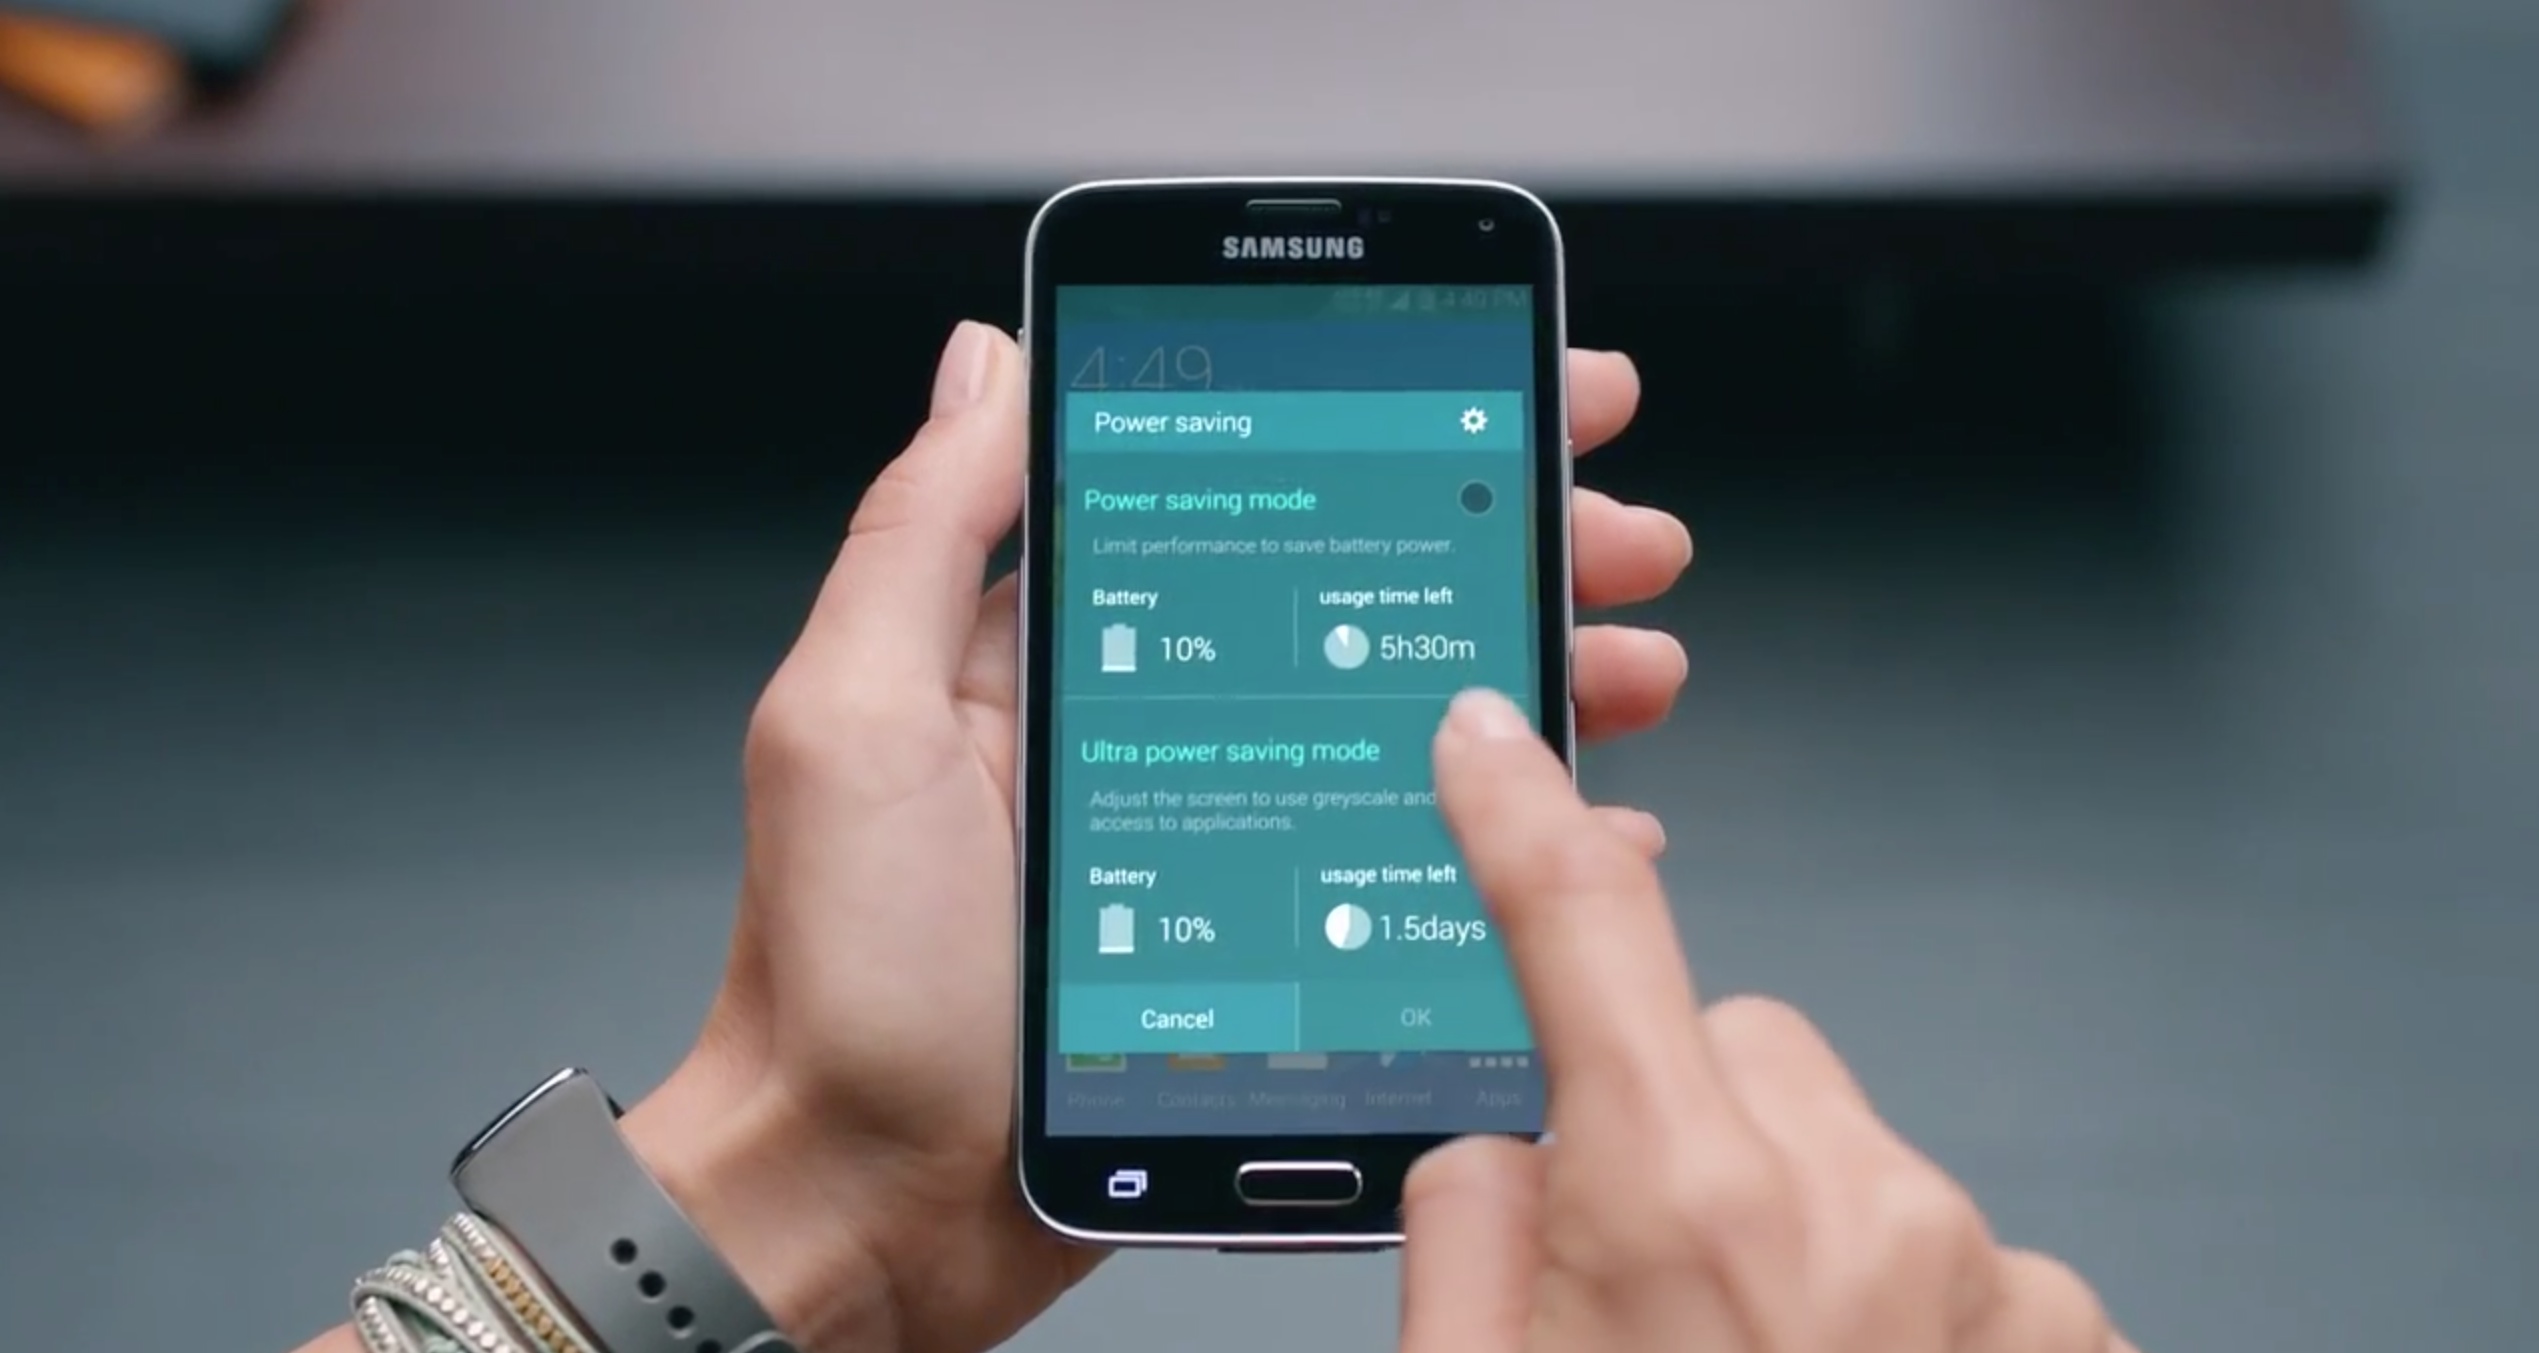 Galaxy S5 (Ultra Power Saving Mode)